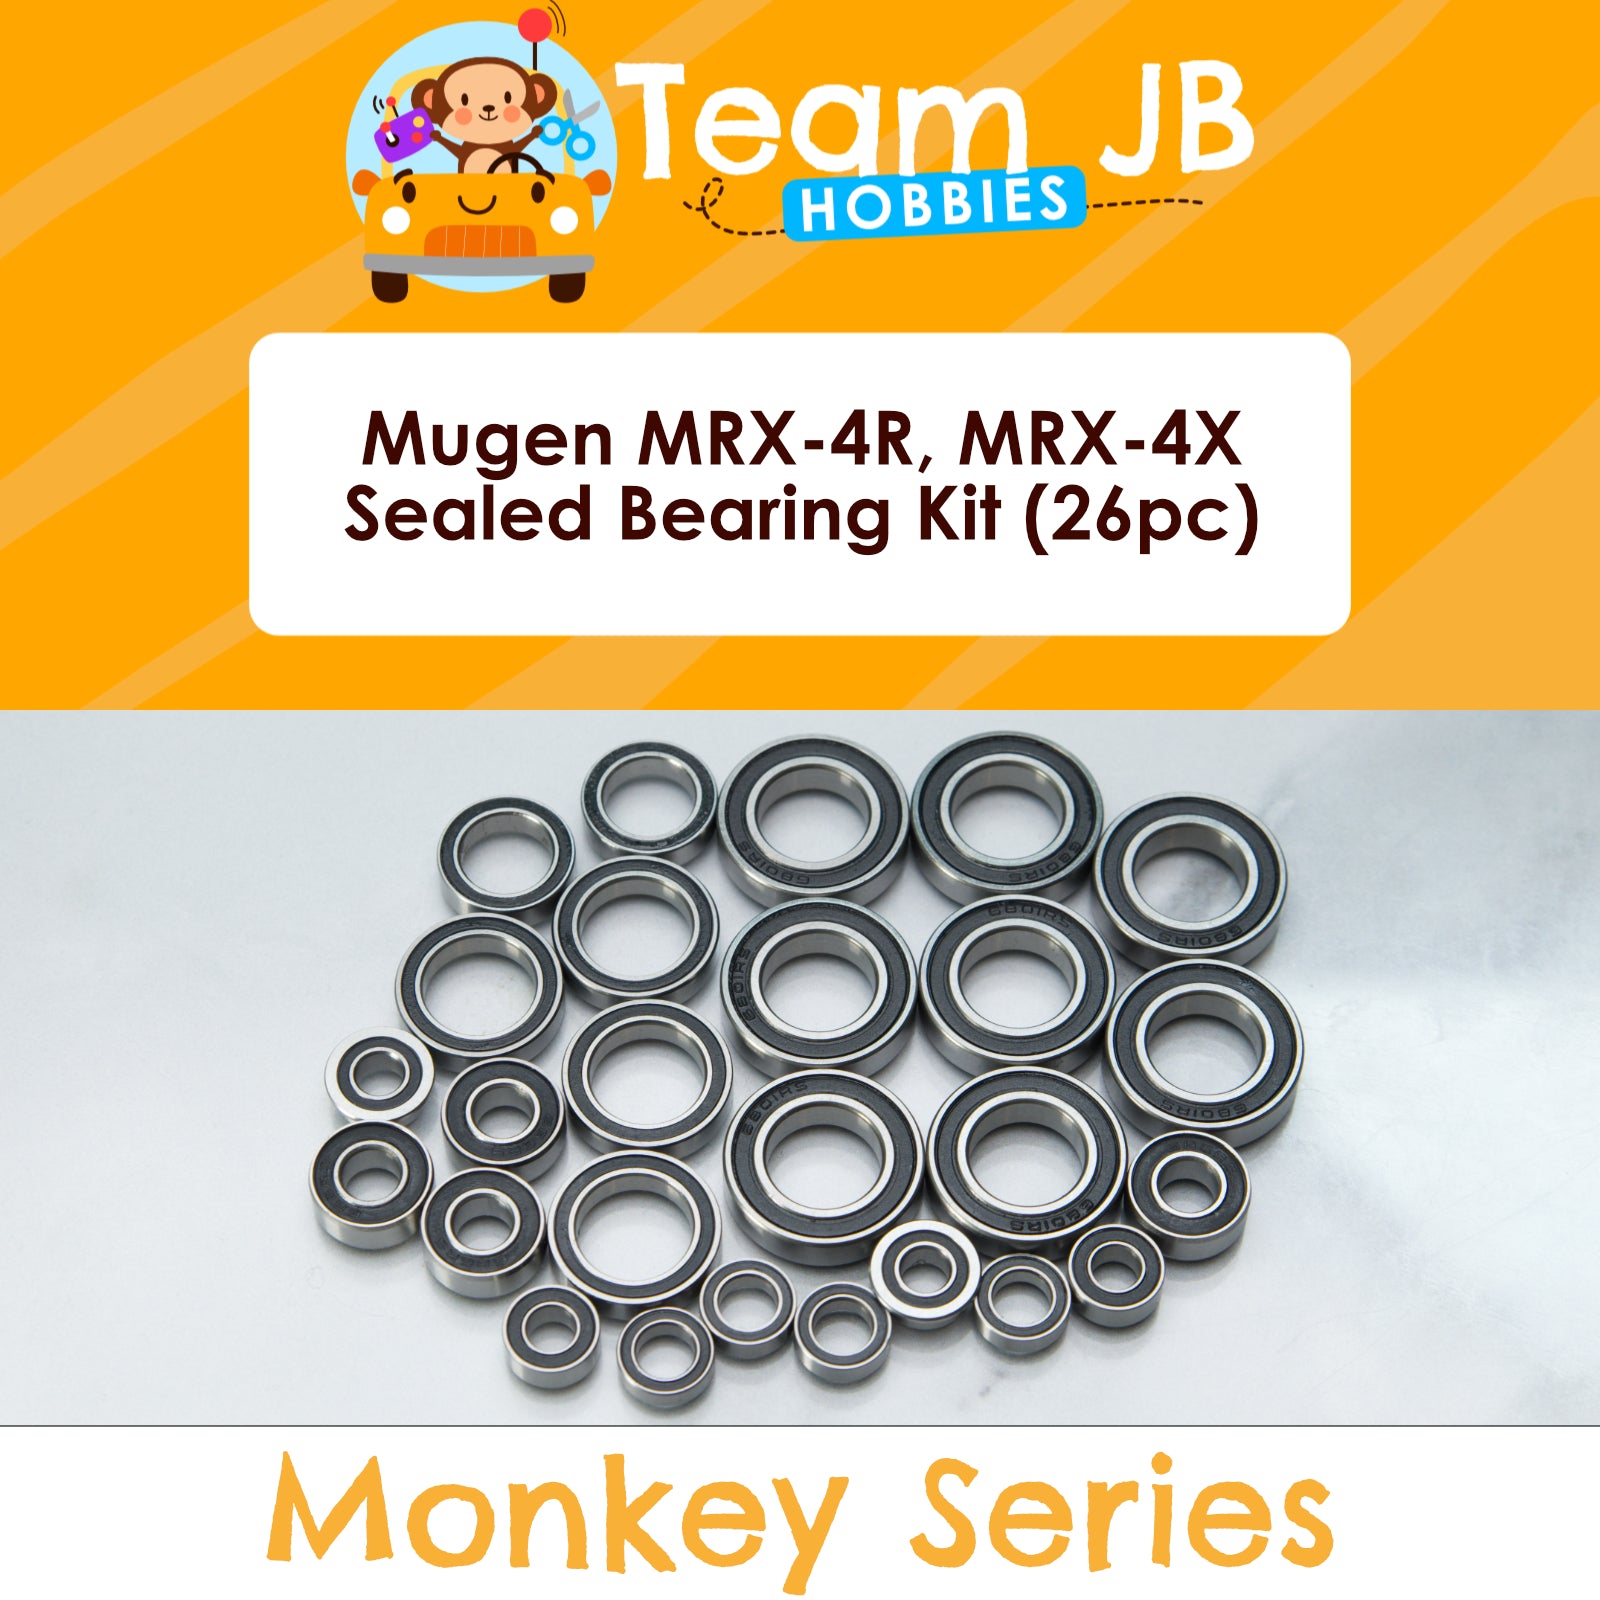 Mugen MRX-4R, MRX-4X - Sealed Bearing Kit